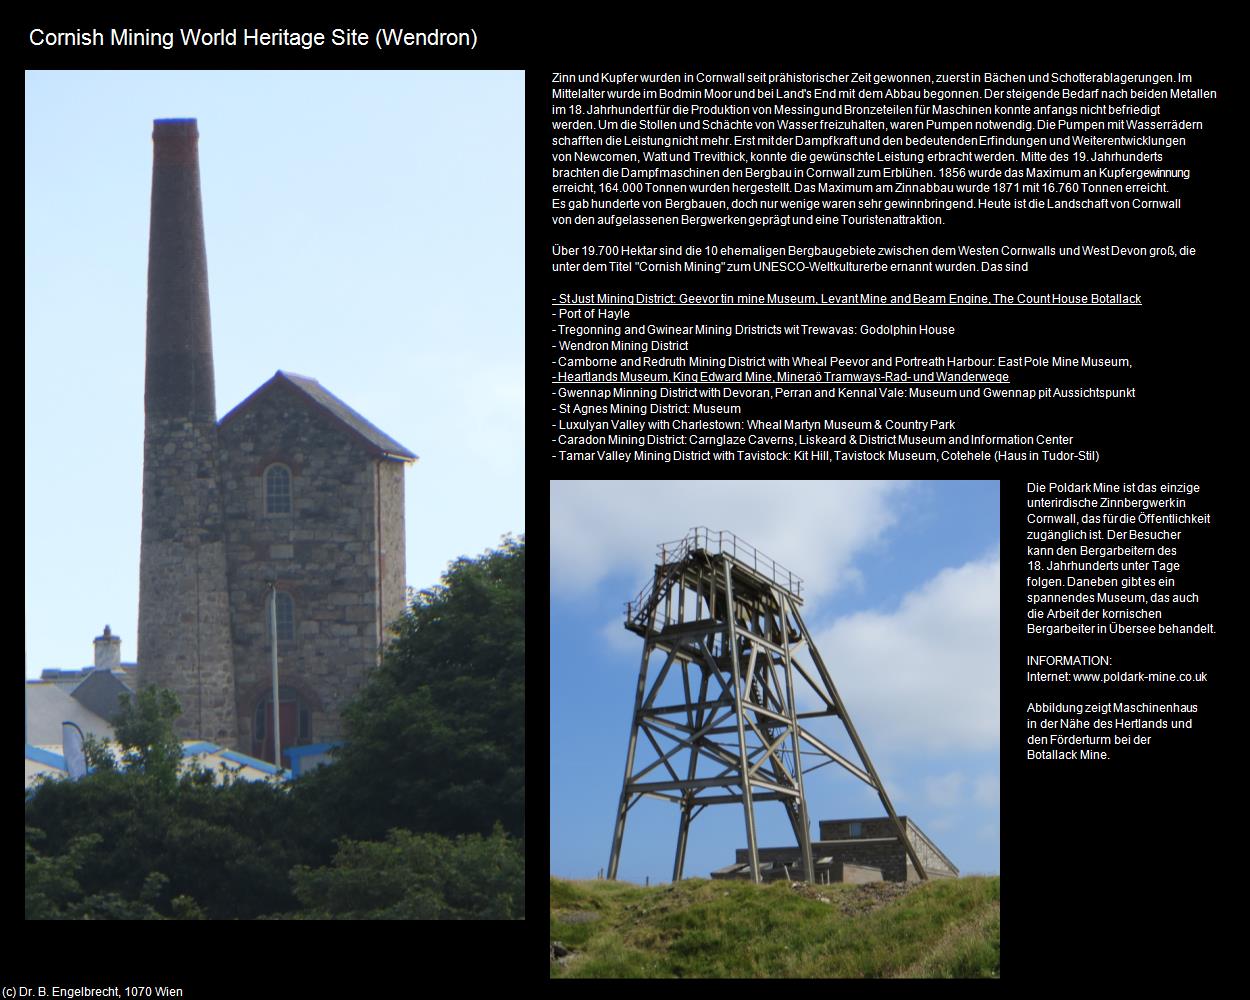 Cornish Mining World Heritage Site (Wendron, England) in Kulturatlas-ENGLAND und WALES(c)B.Engelbrecht